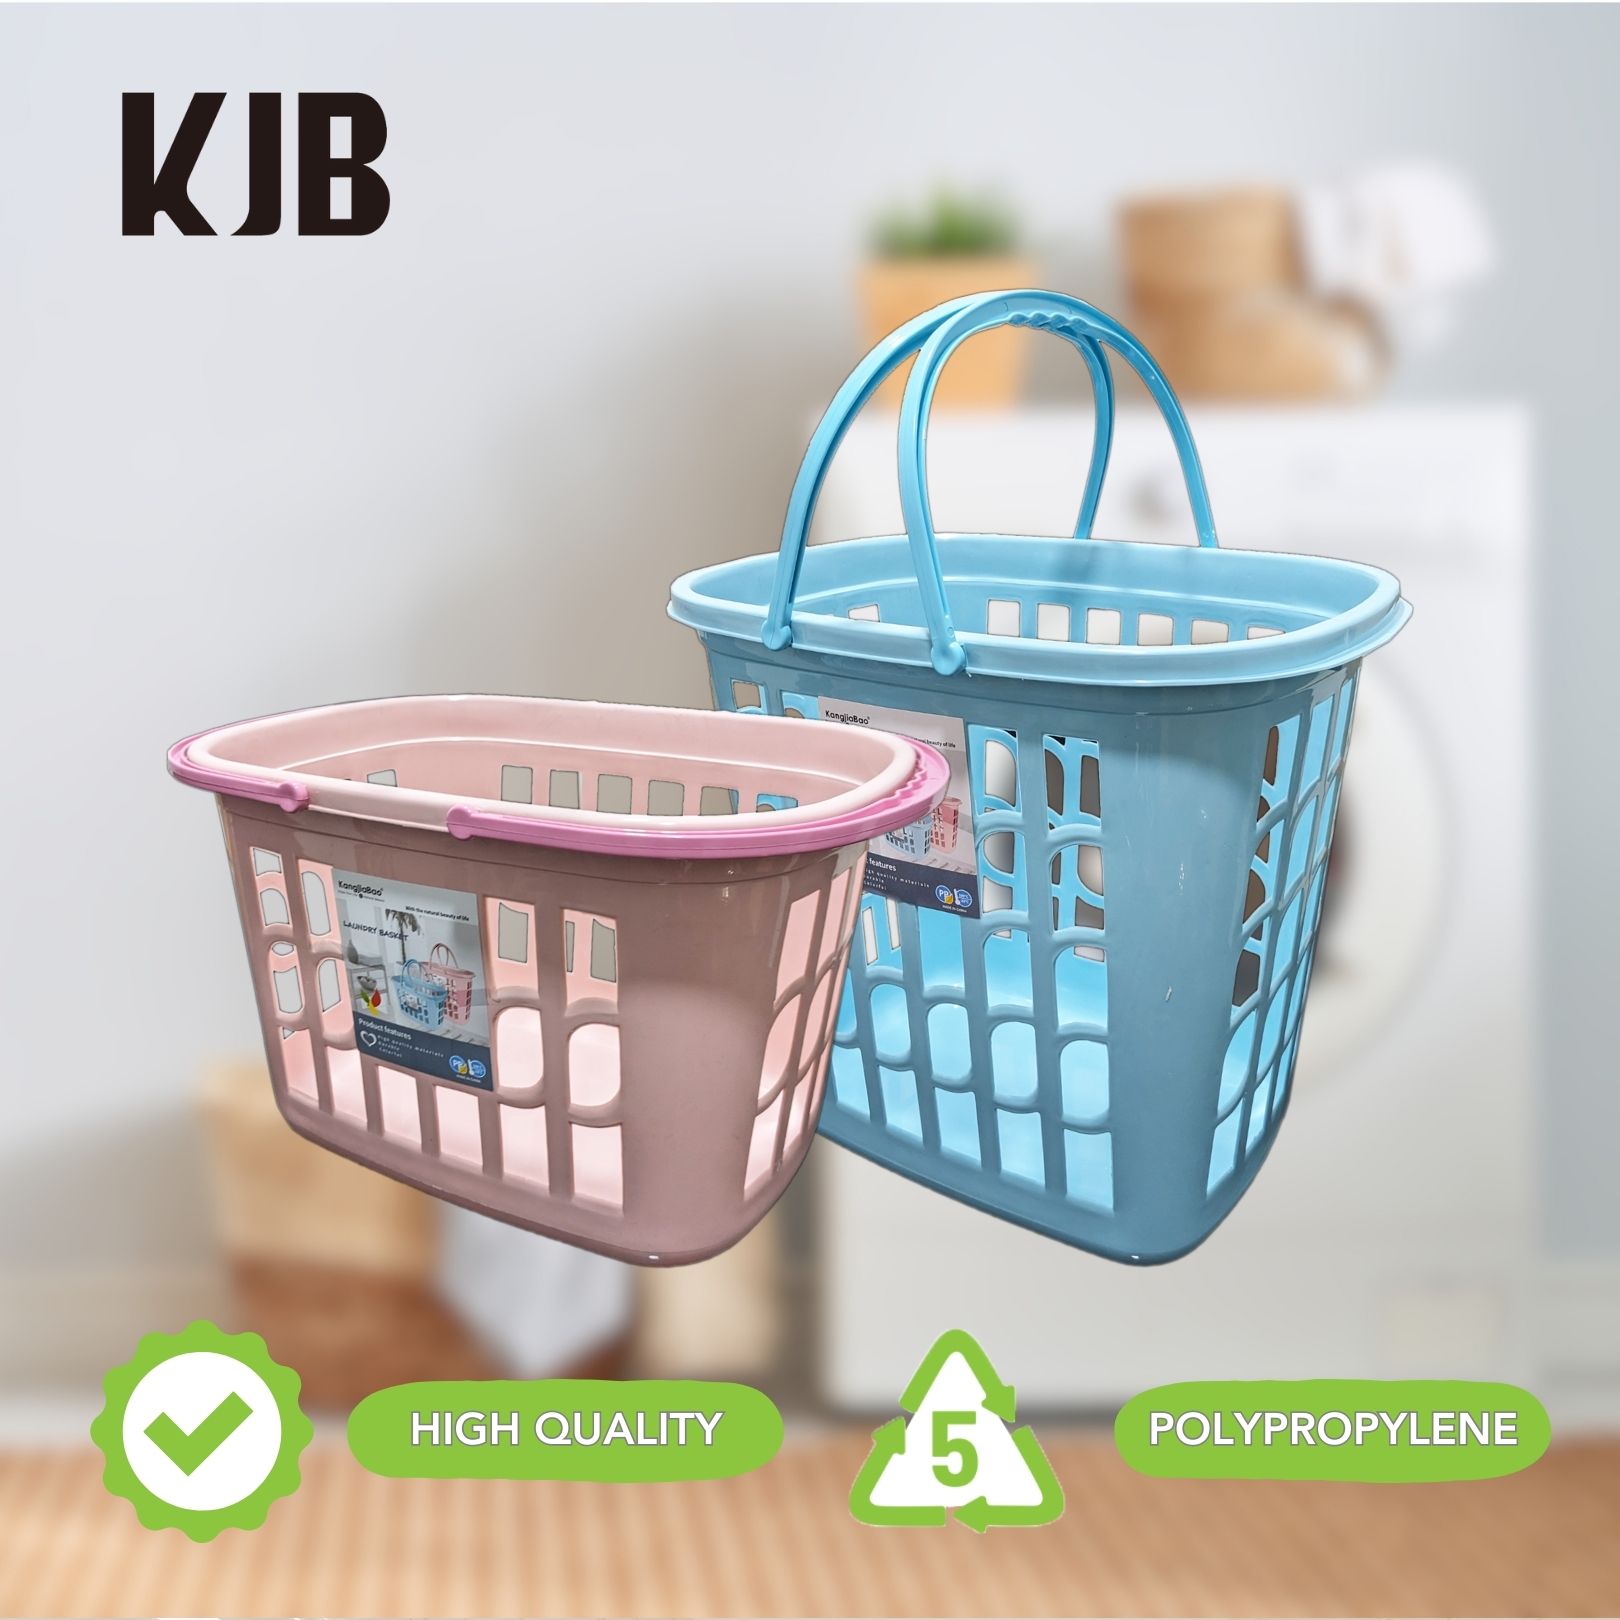 KJB Plastic Laundry Basket with Carrying Handles